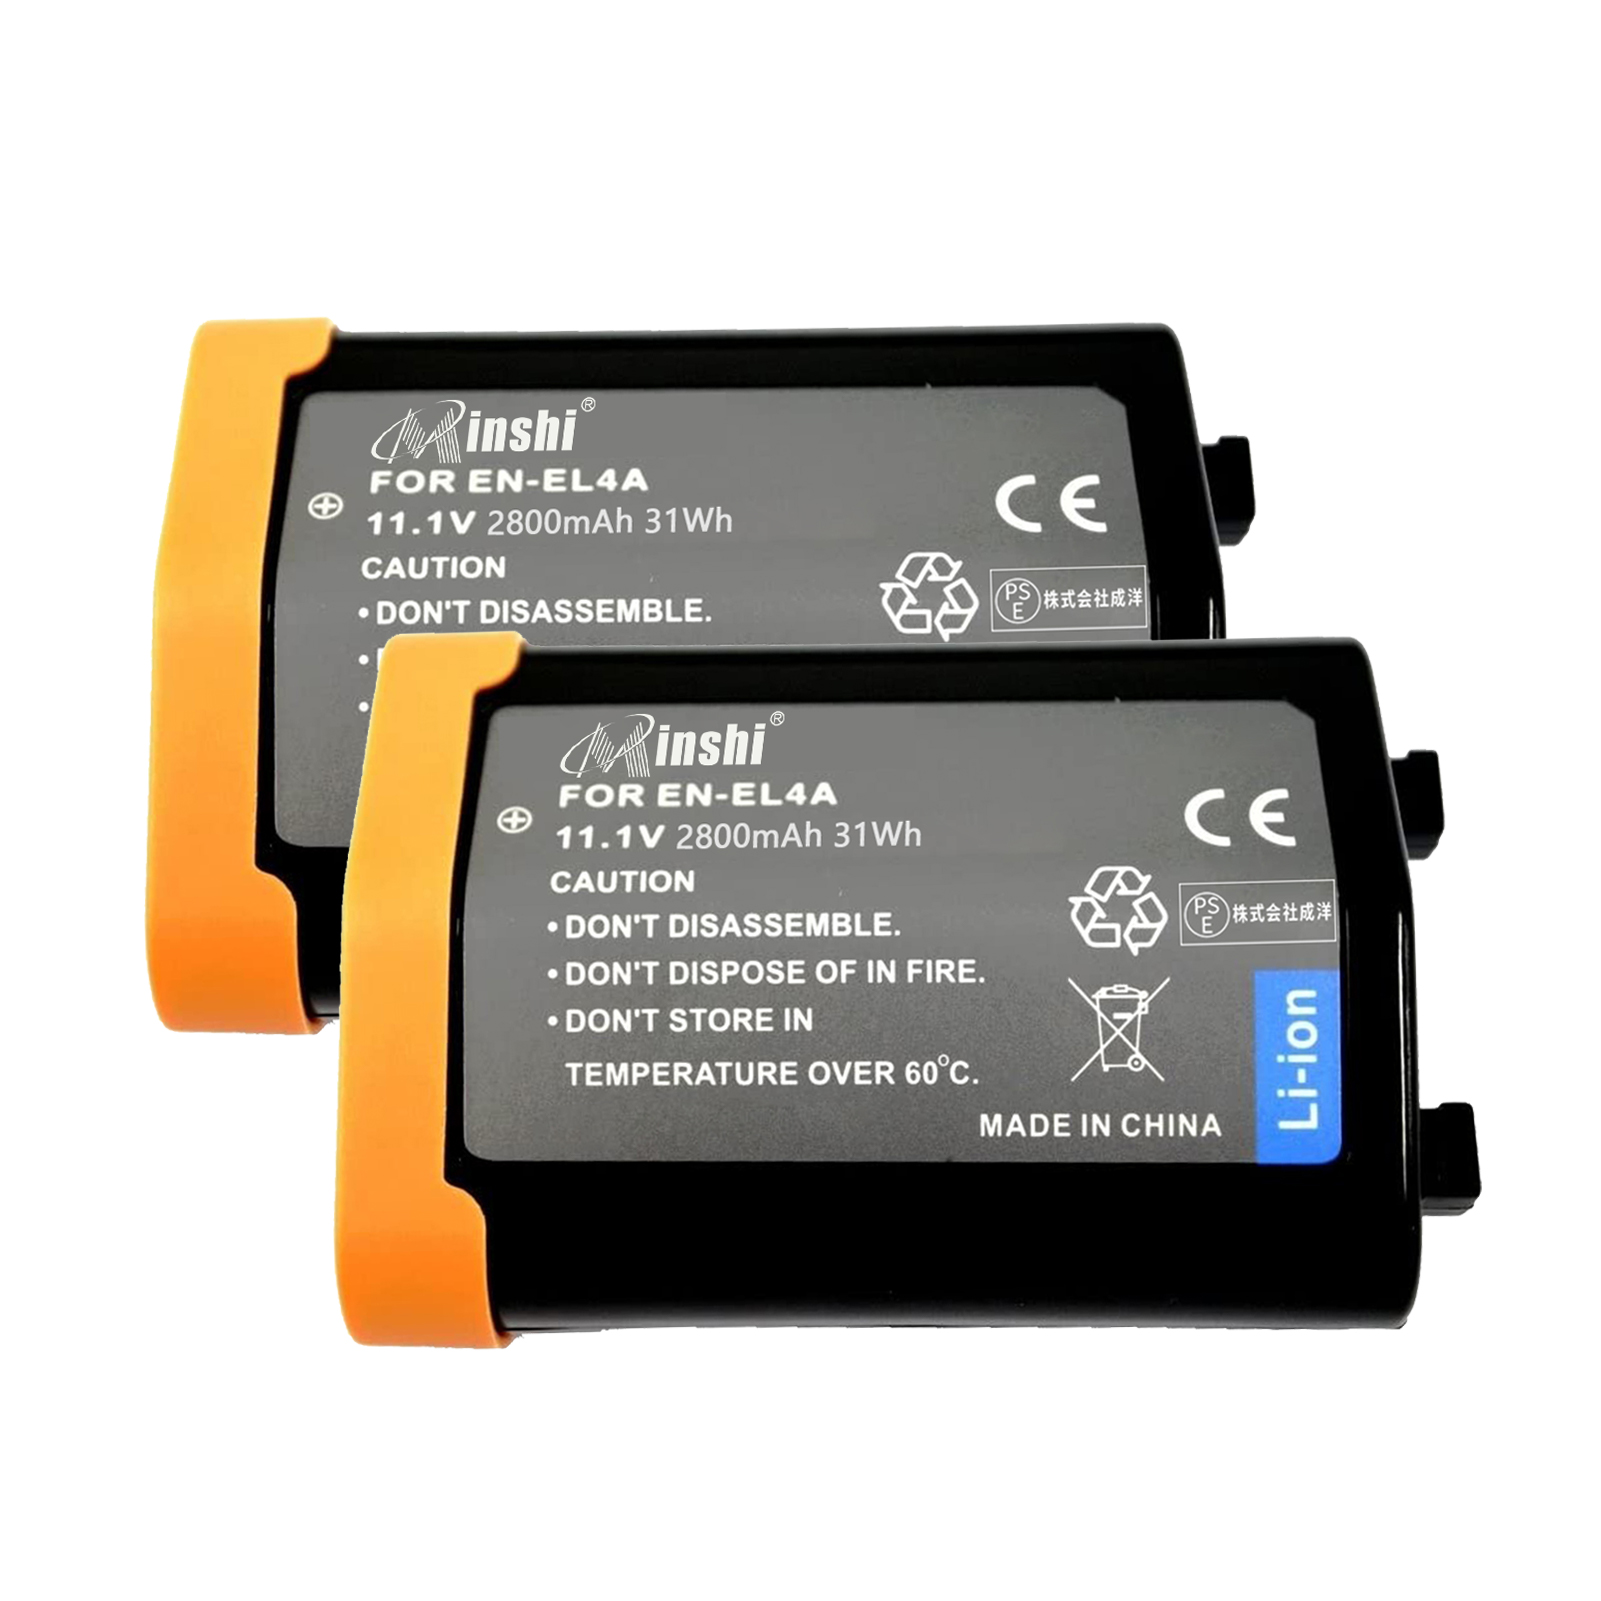 【２個セット】minshi D300 EN-EL4【2800mAh 11.1V】PSE認定済 高品質  EN-EL4A互換バッテリー